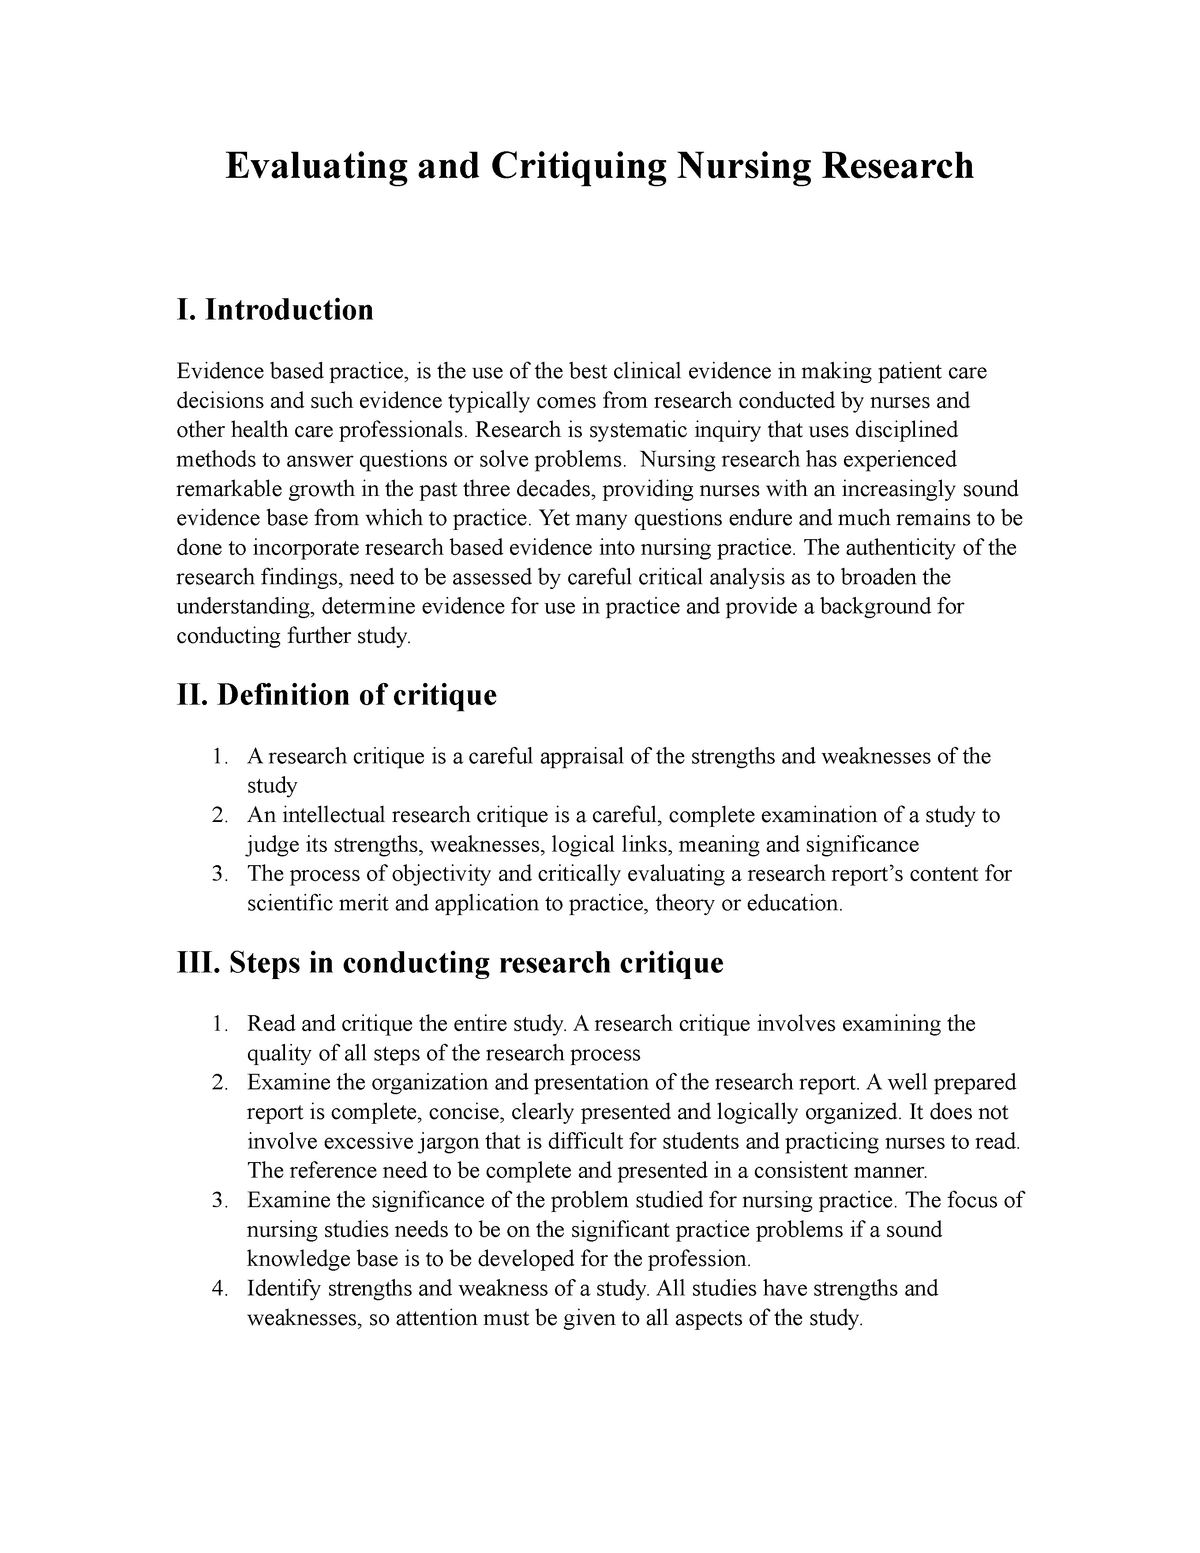 nursing research critique example pdf